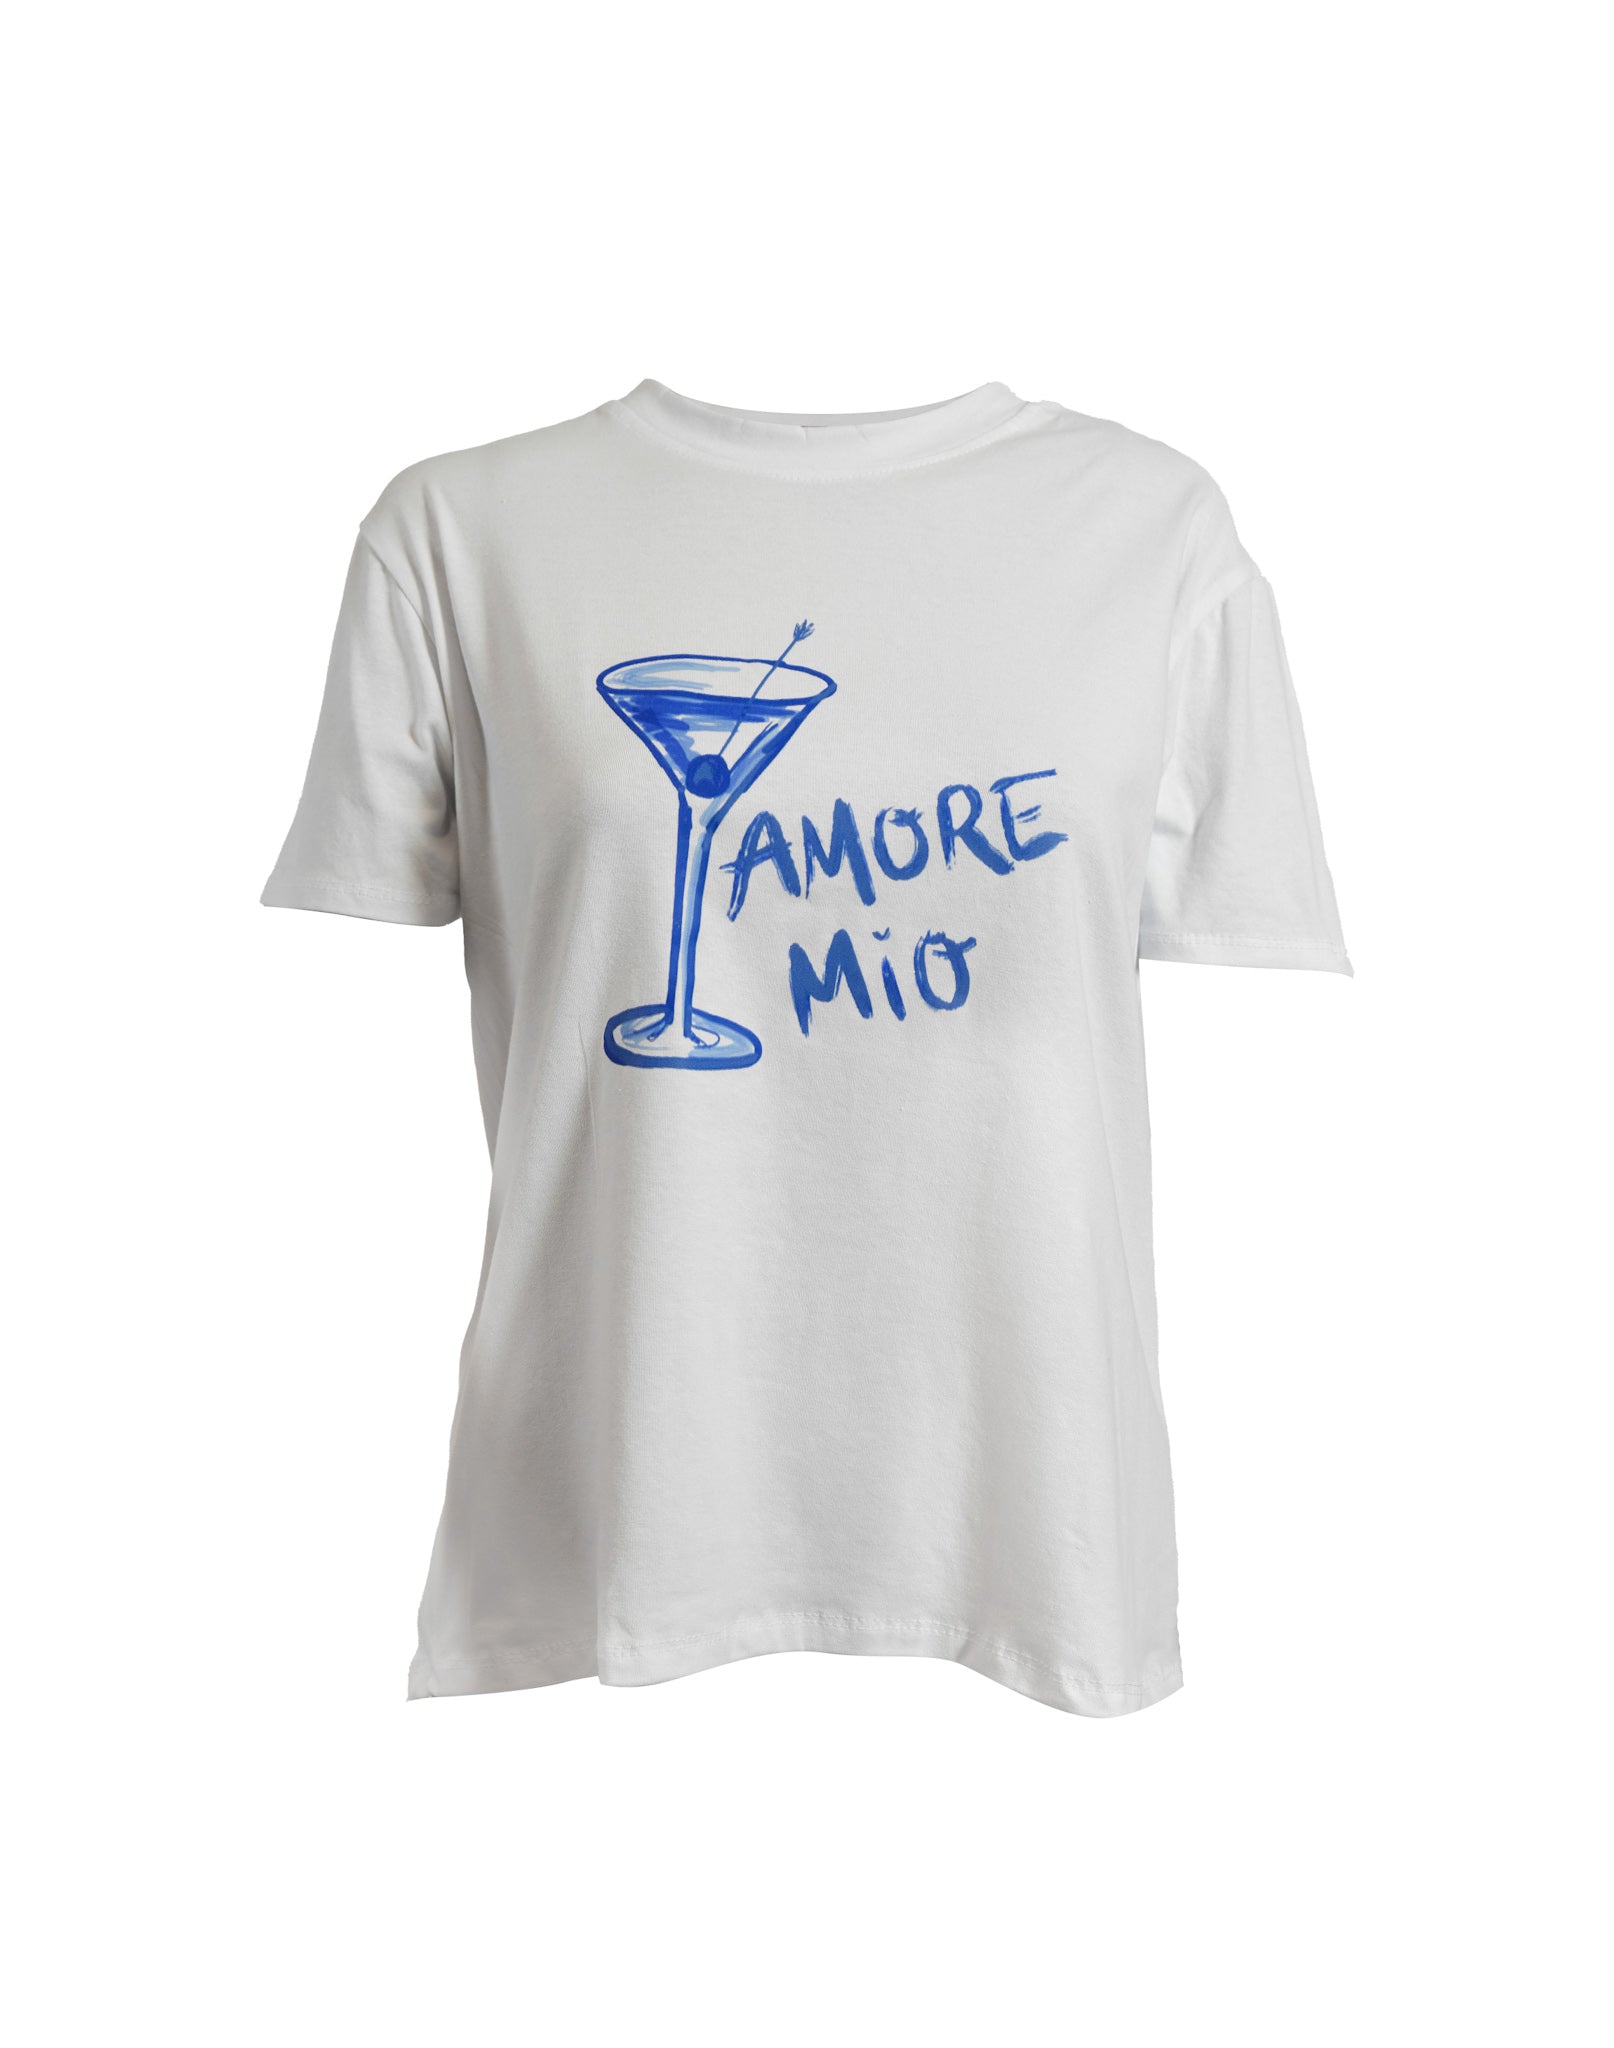 "Amore mio" t-shirt